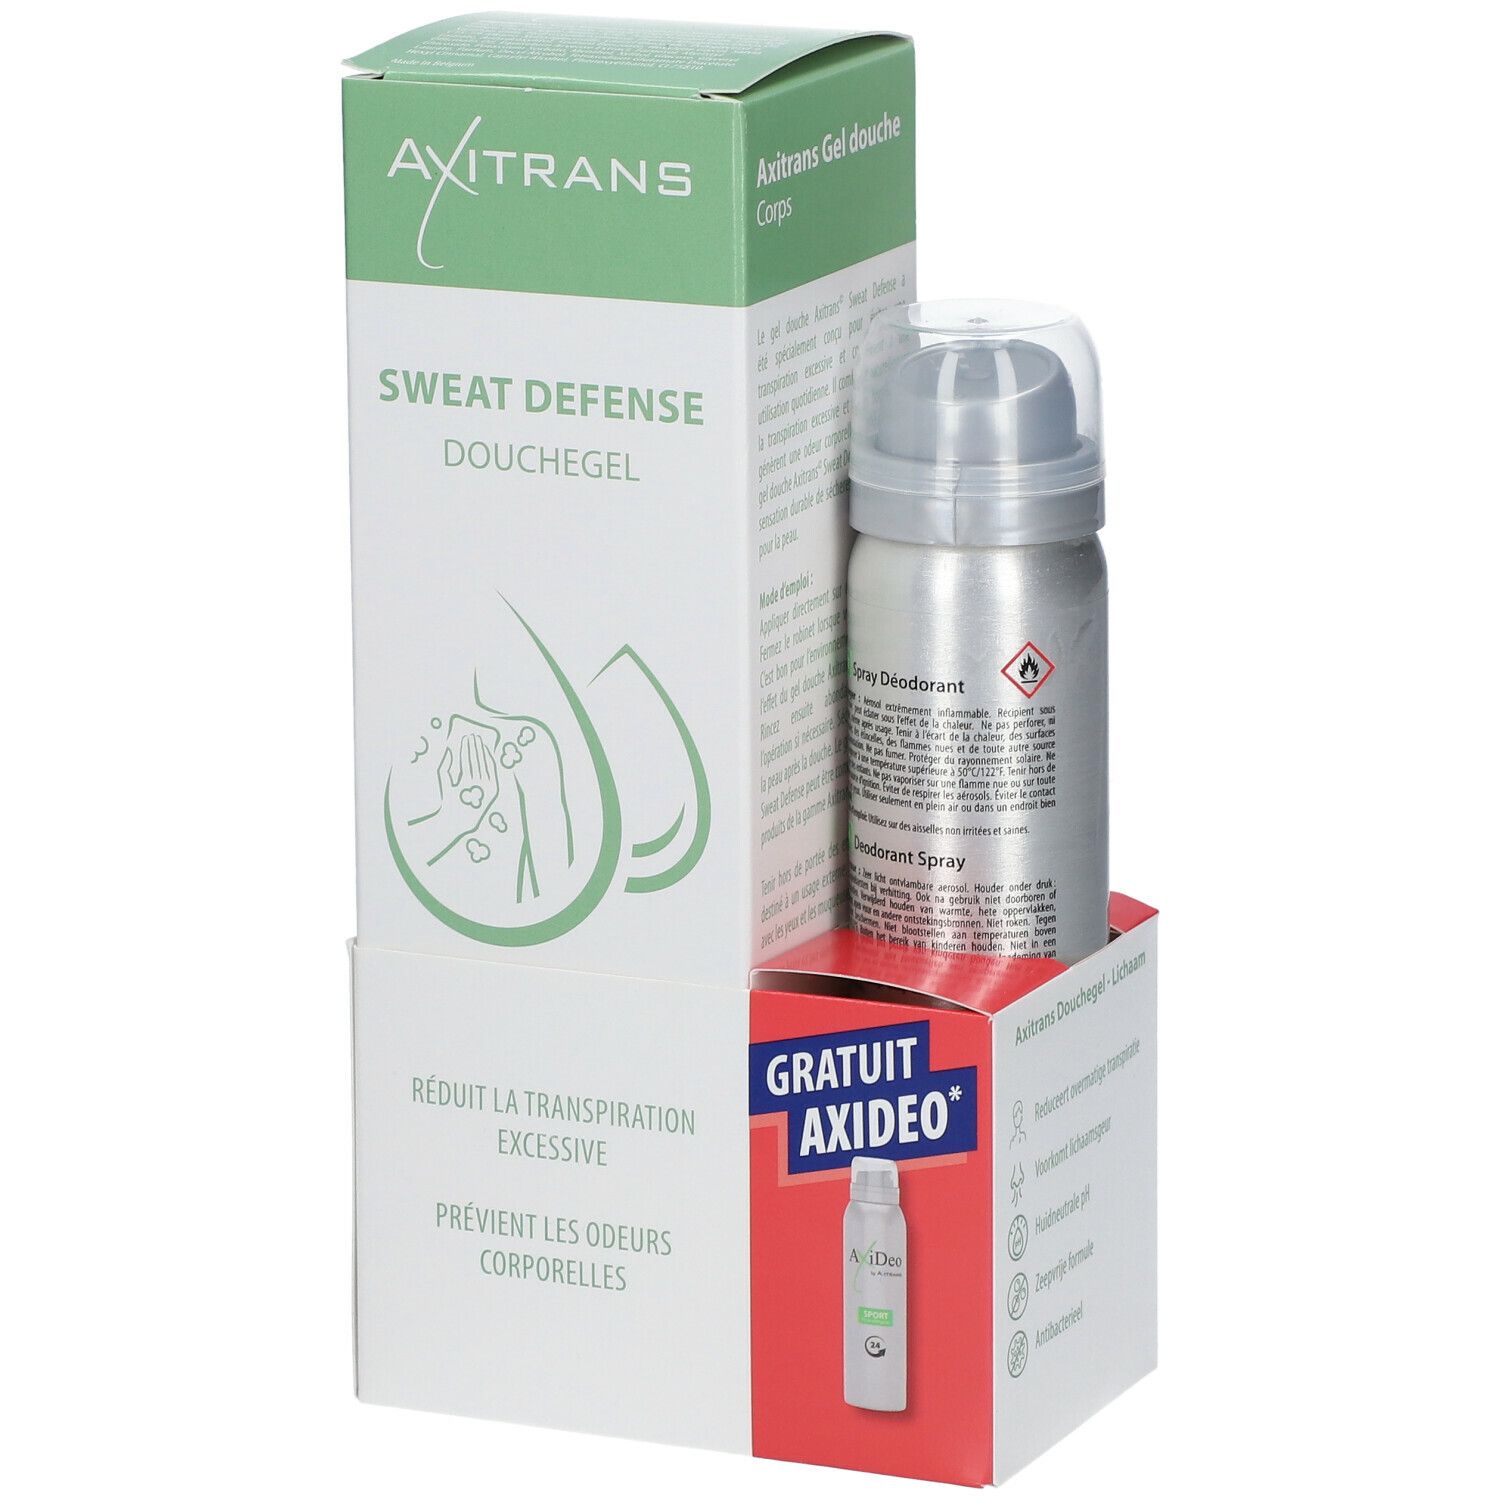 Axitrans Sweat Defense Gel douche + AxiDeo Sports Spray